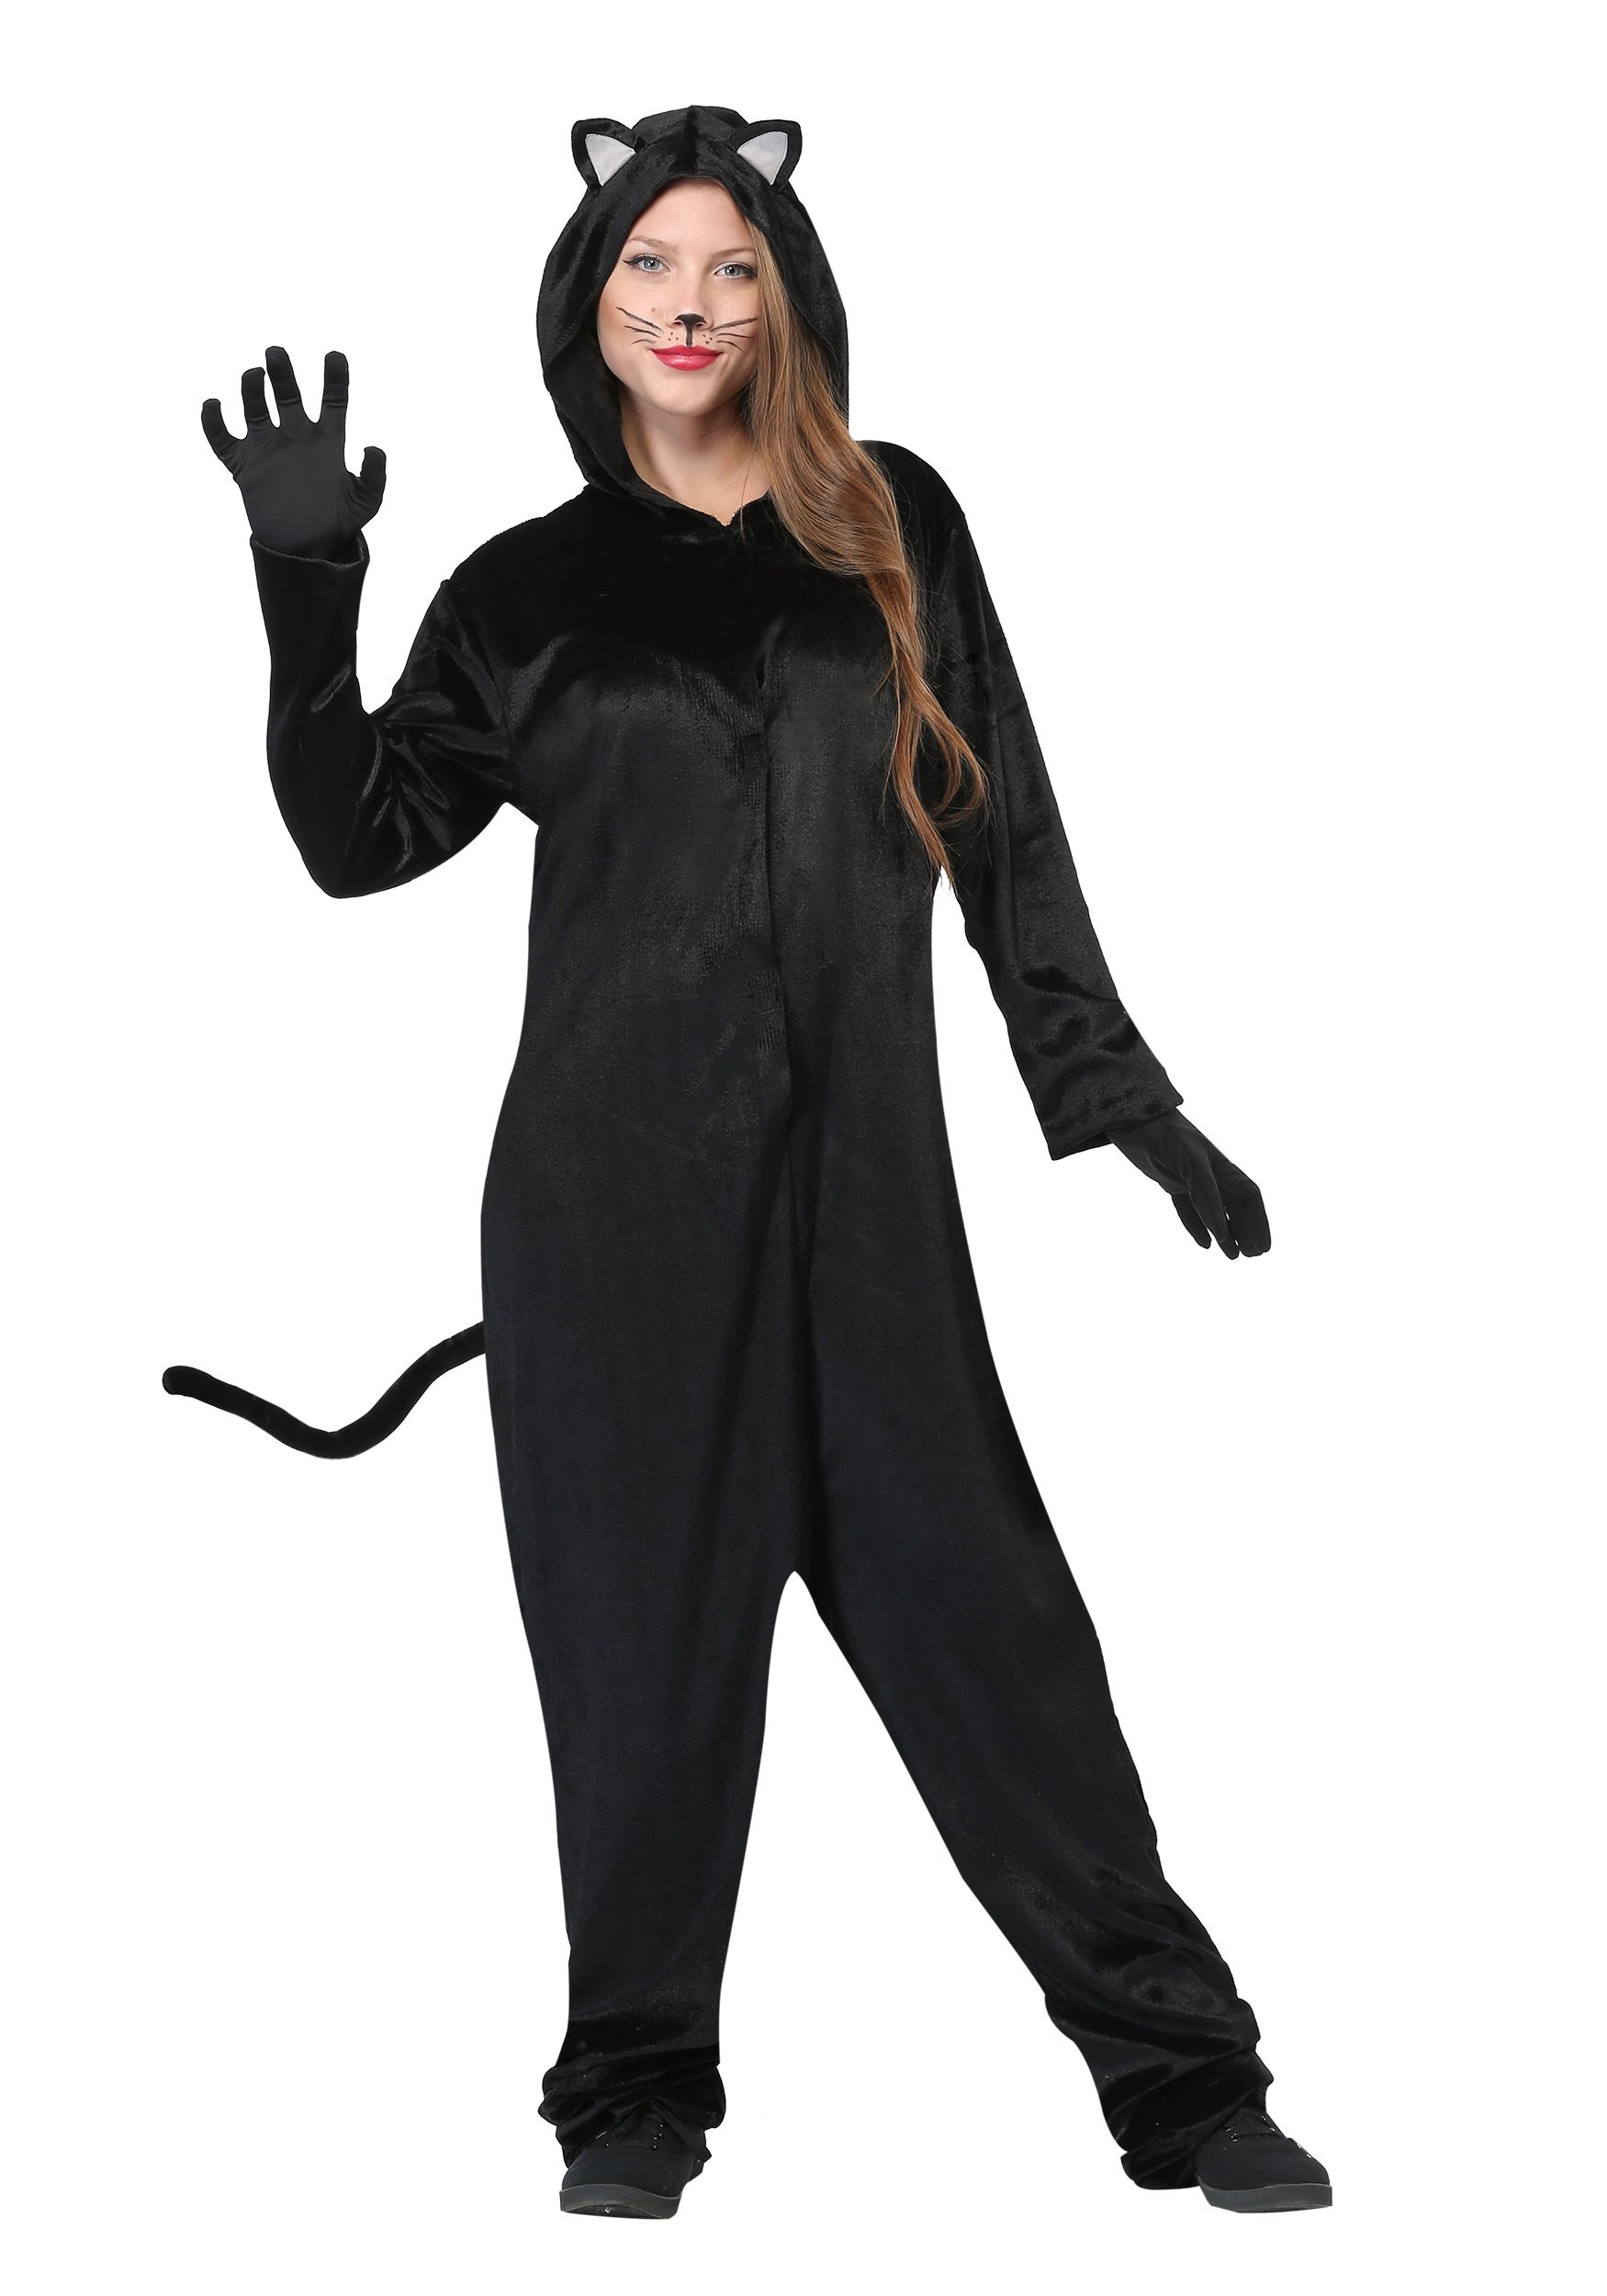 Photos - Fancy Dress Black Cat FUN Costumes  Costume for Adults | Cat Costumes Black FUN6159AD 